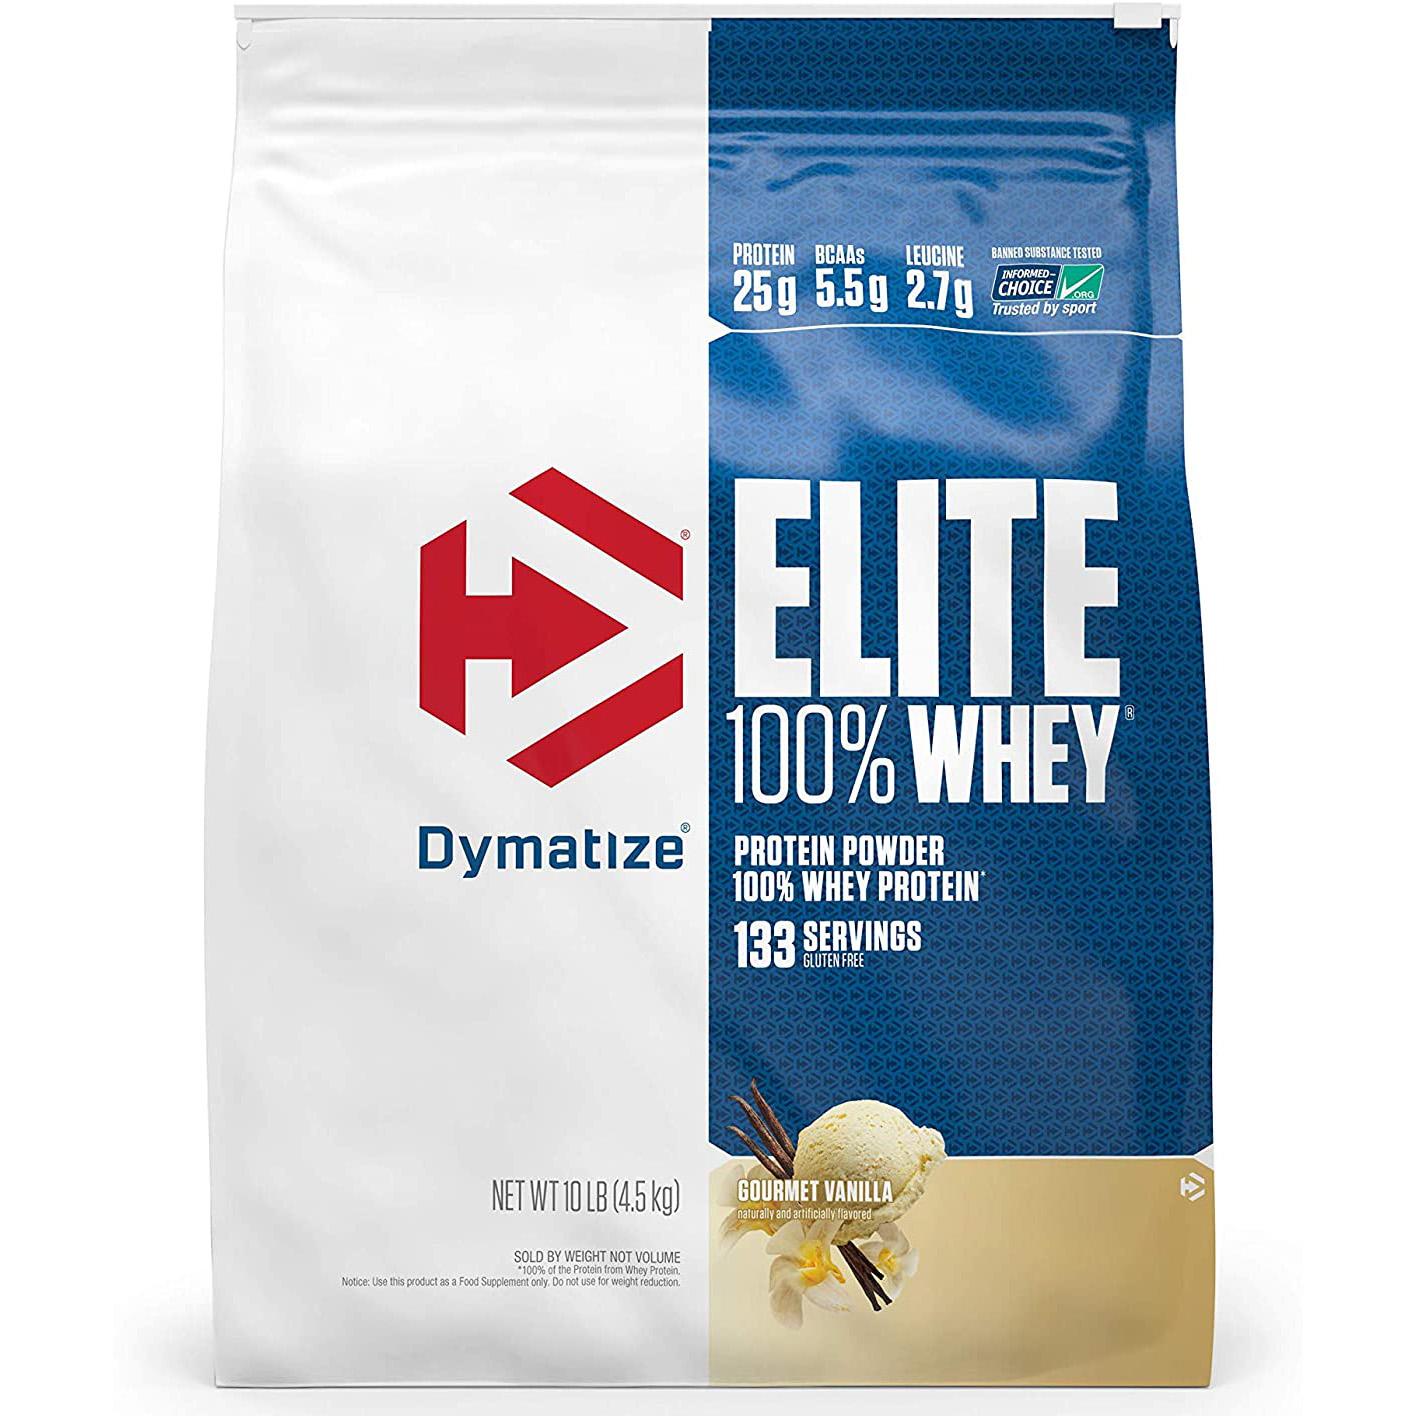 10Lbs Dymatize Elite Whey Protein Powder for $54.06 Shipped